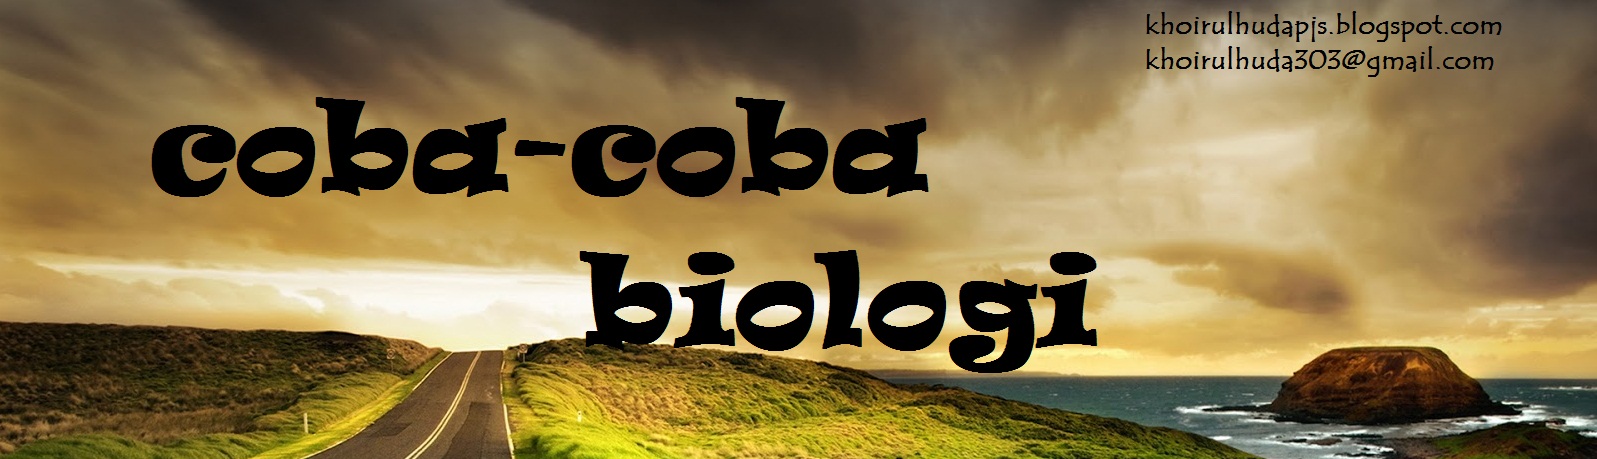 COBA-COBA BIOLOGI